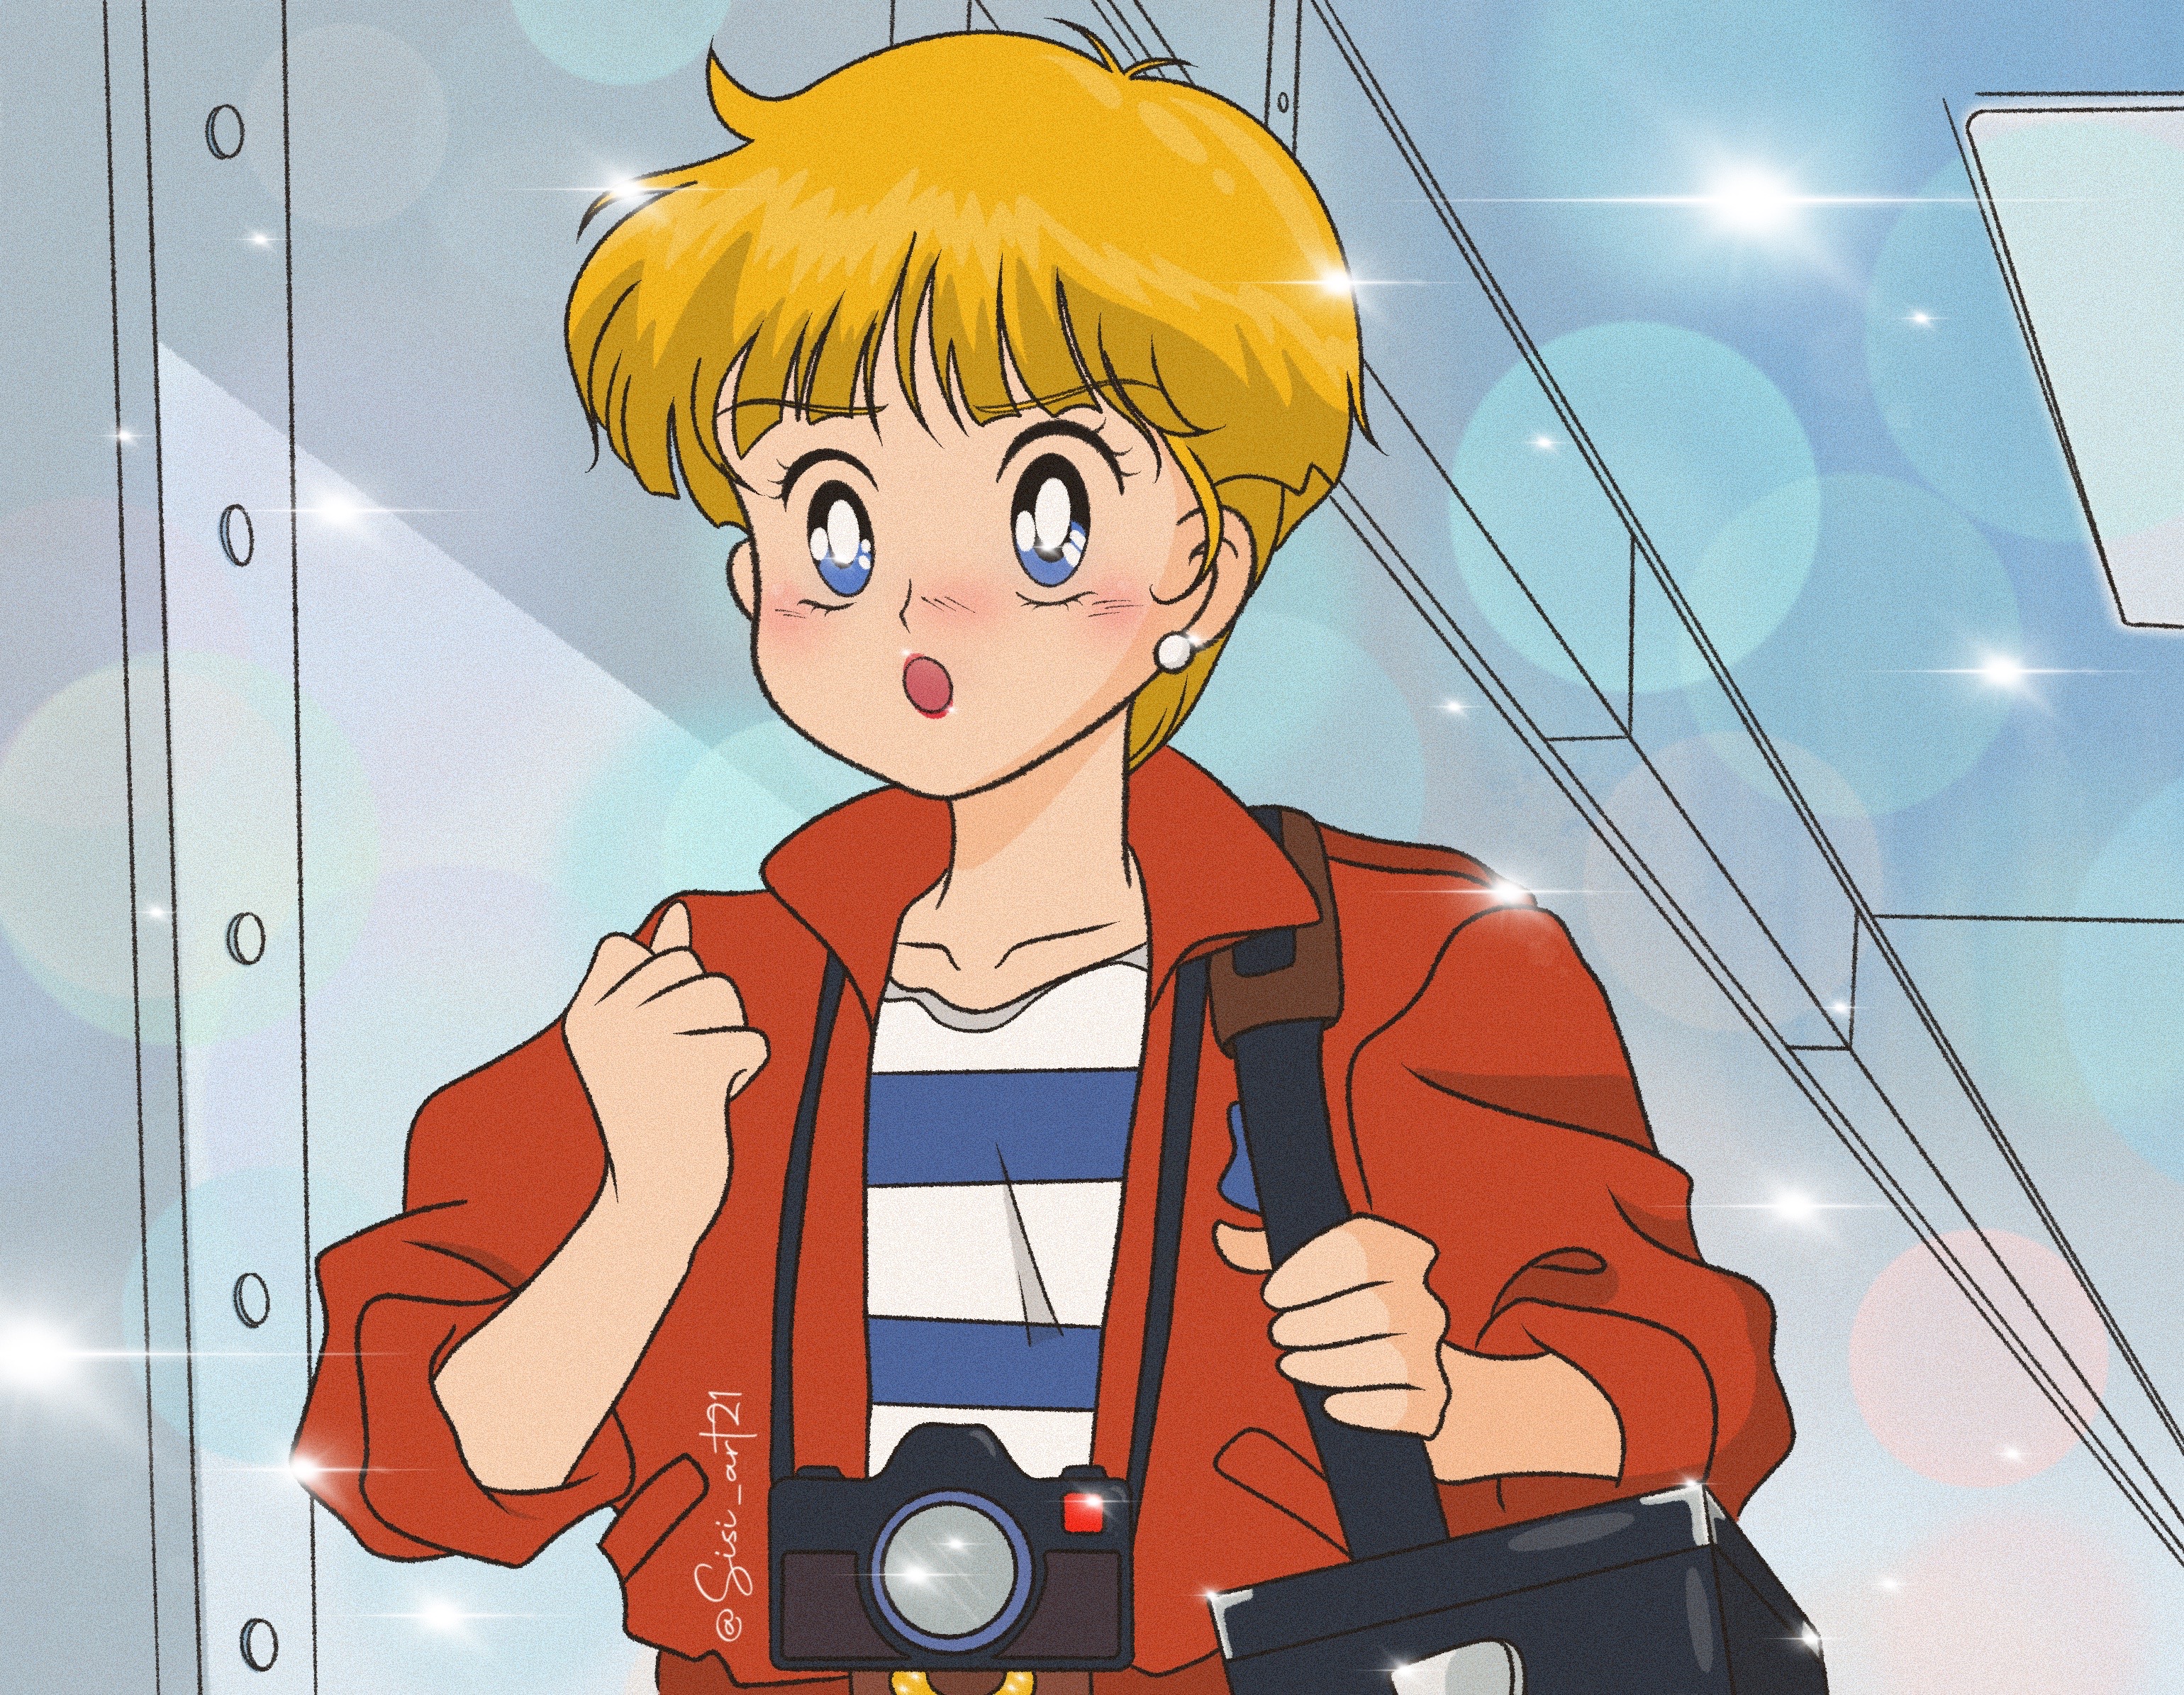 80s Anime eyes by Sisiart21 on DeviantArt